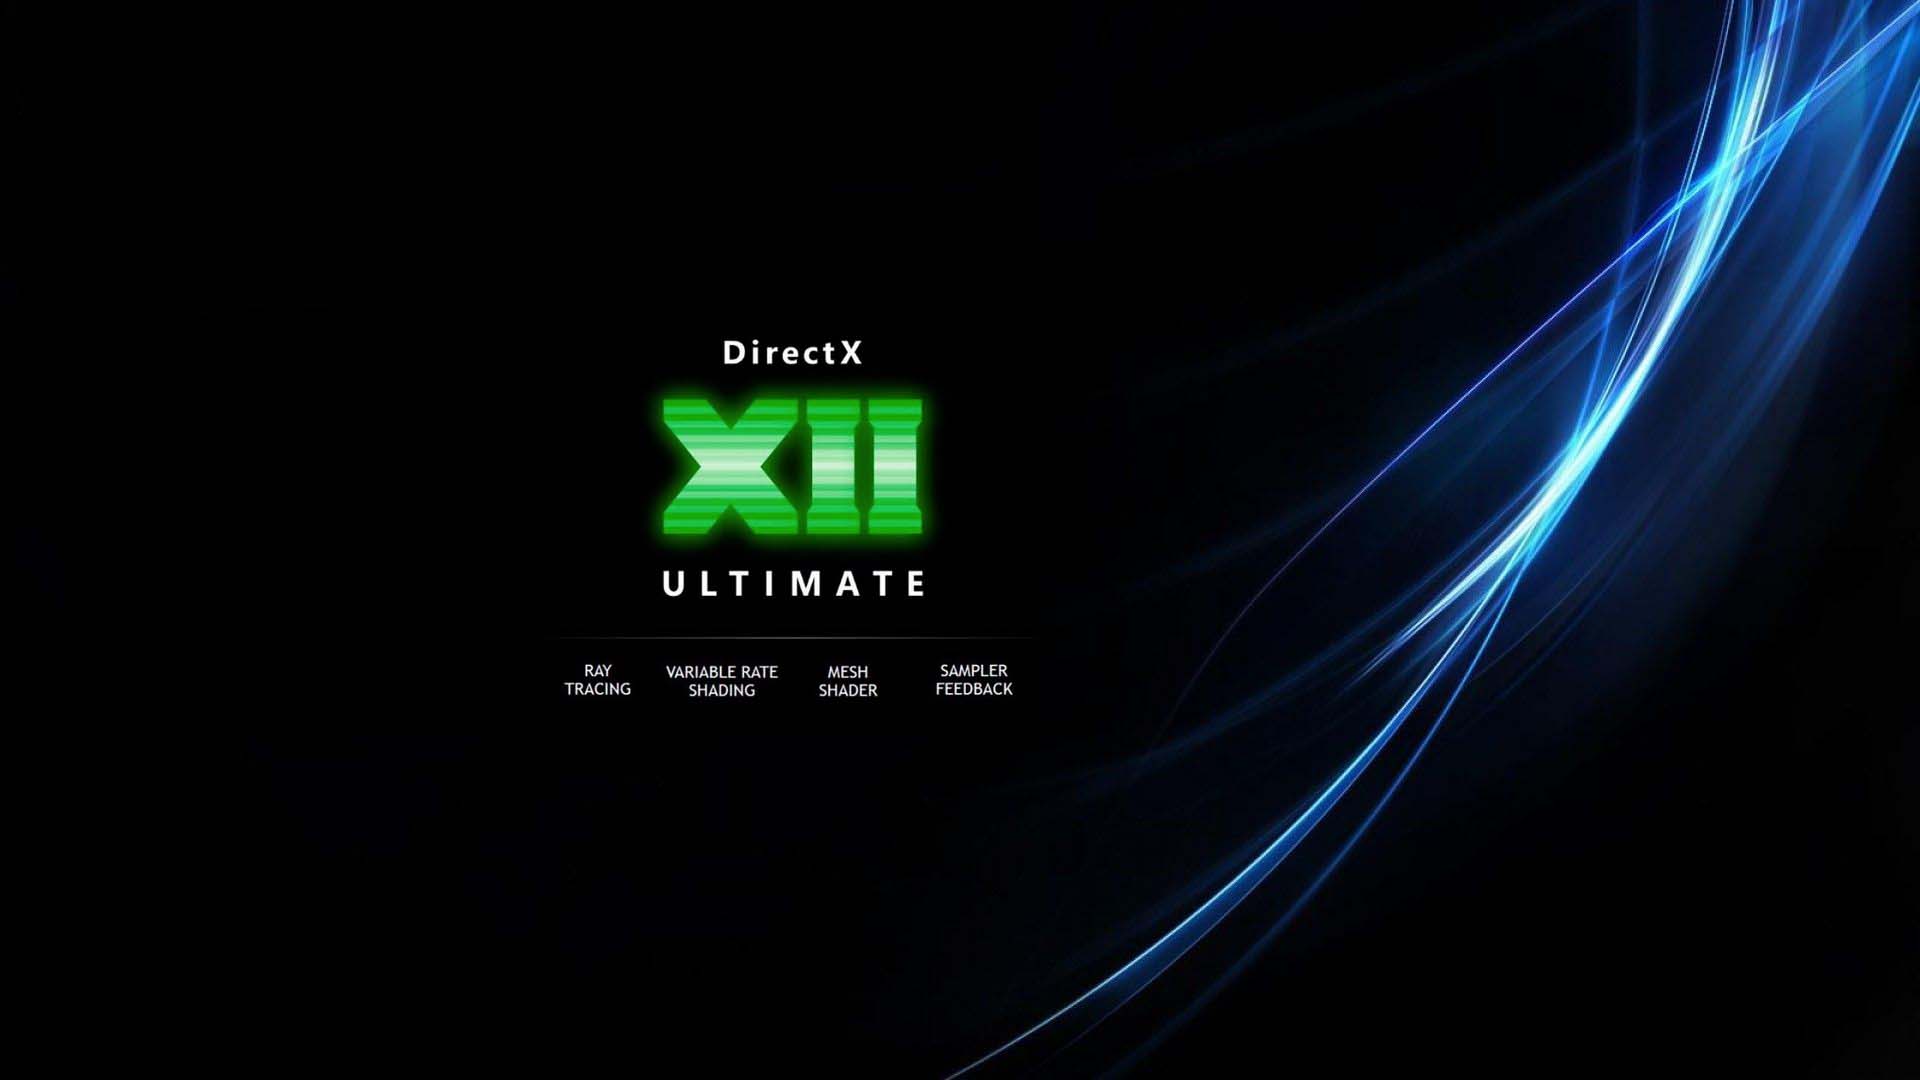 microsoft directx 12 ultimate download